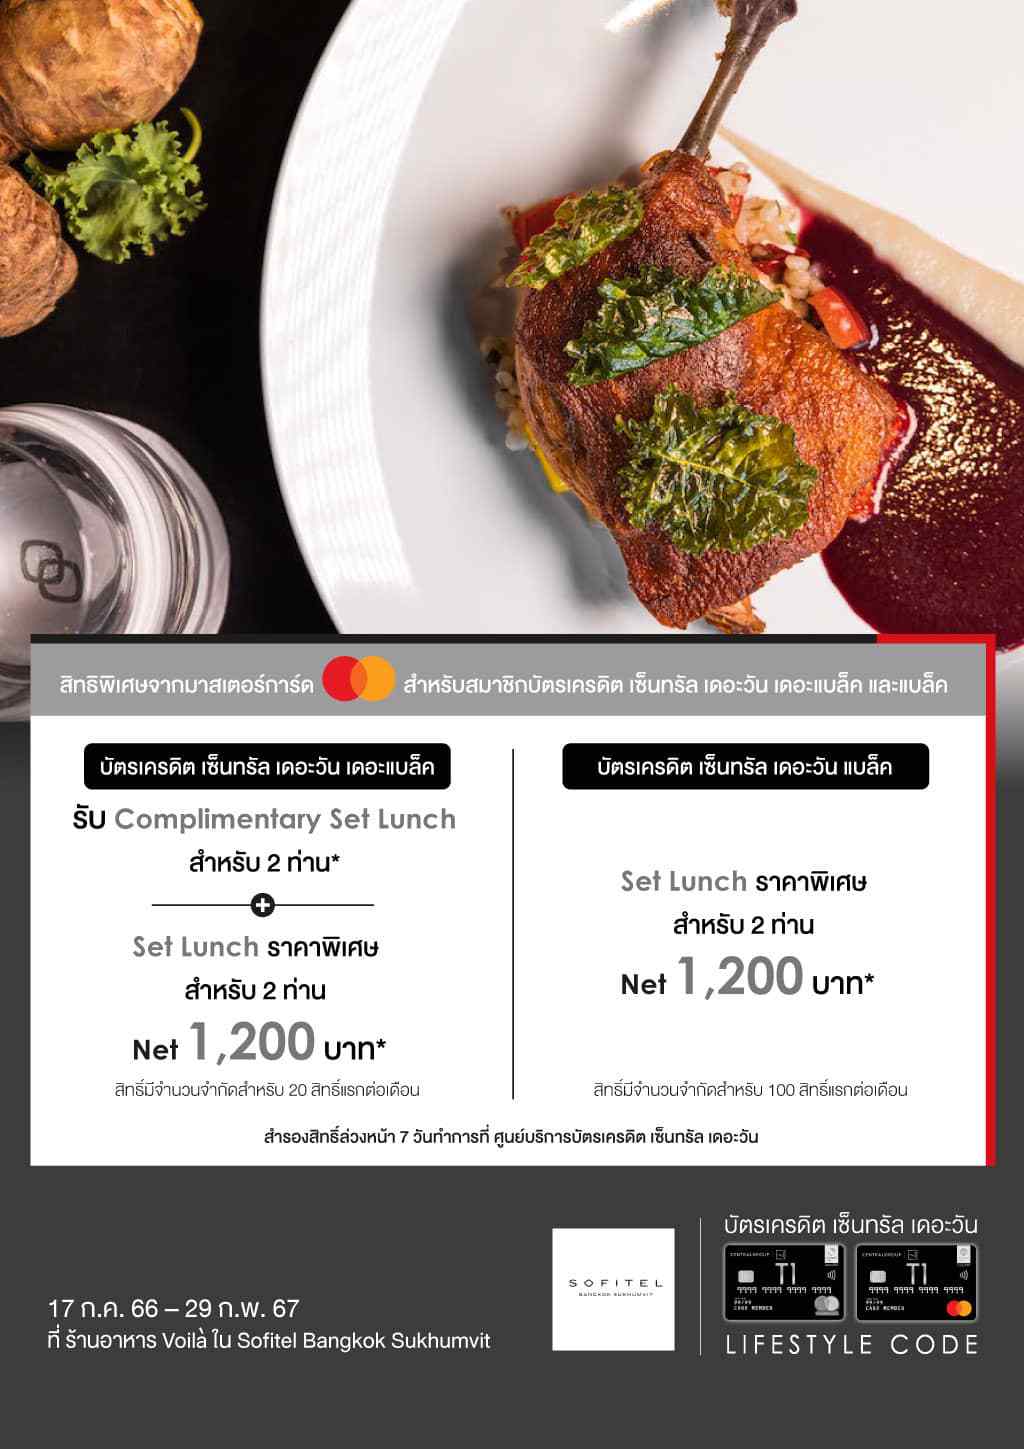 Set Lunch ราคาพิเศษ สำหรับ 2 ท่าน ที่ร้านอาหาร Voilà ใน Sofitel Bangkok Sukhumvit  | บัตรเครดิต เติมน้ำมัน | สิทธิประโยชน์บัตรเครดิต | บัตรเครดิต ผ่อน 0% | บัตรเครดิต ใช้ต่างประเทศ | บัตรเครดิต ท่องเที่ยว | สินเชื่อส่วนบุคคล